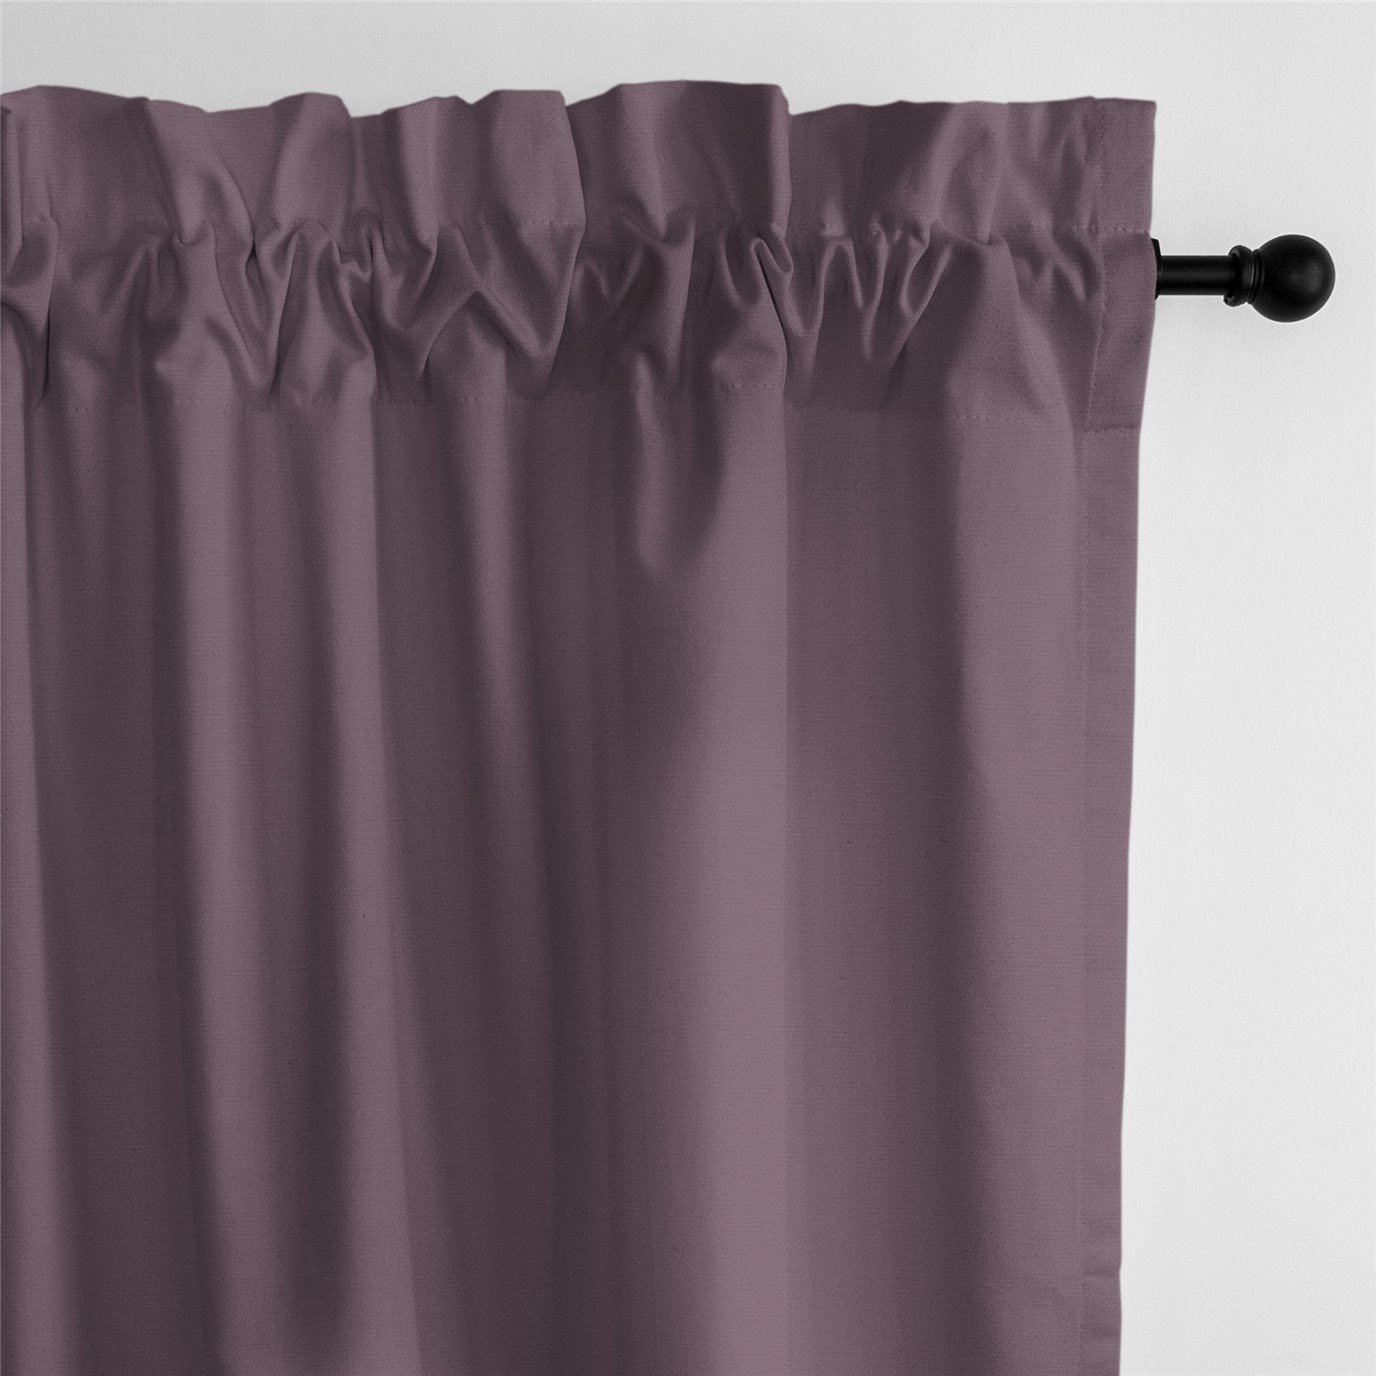 Braxton Purple Grape Pole Top Drapery Panel - Pair - Size 50"x108"